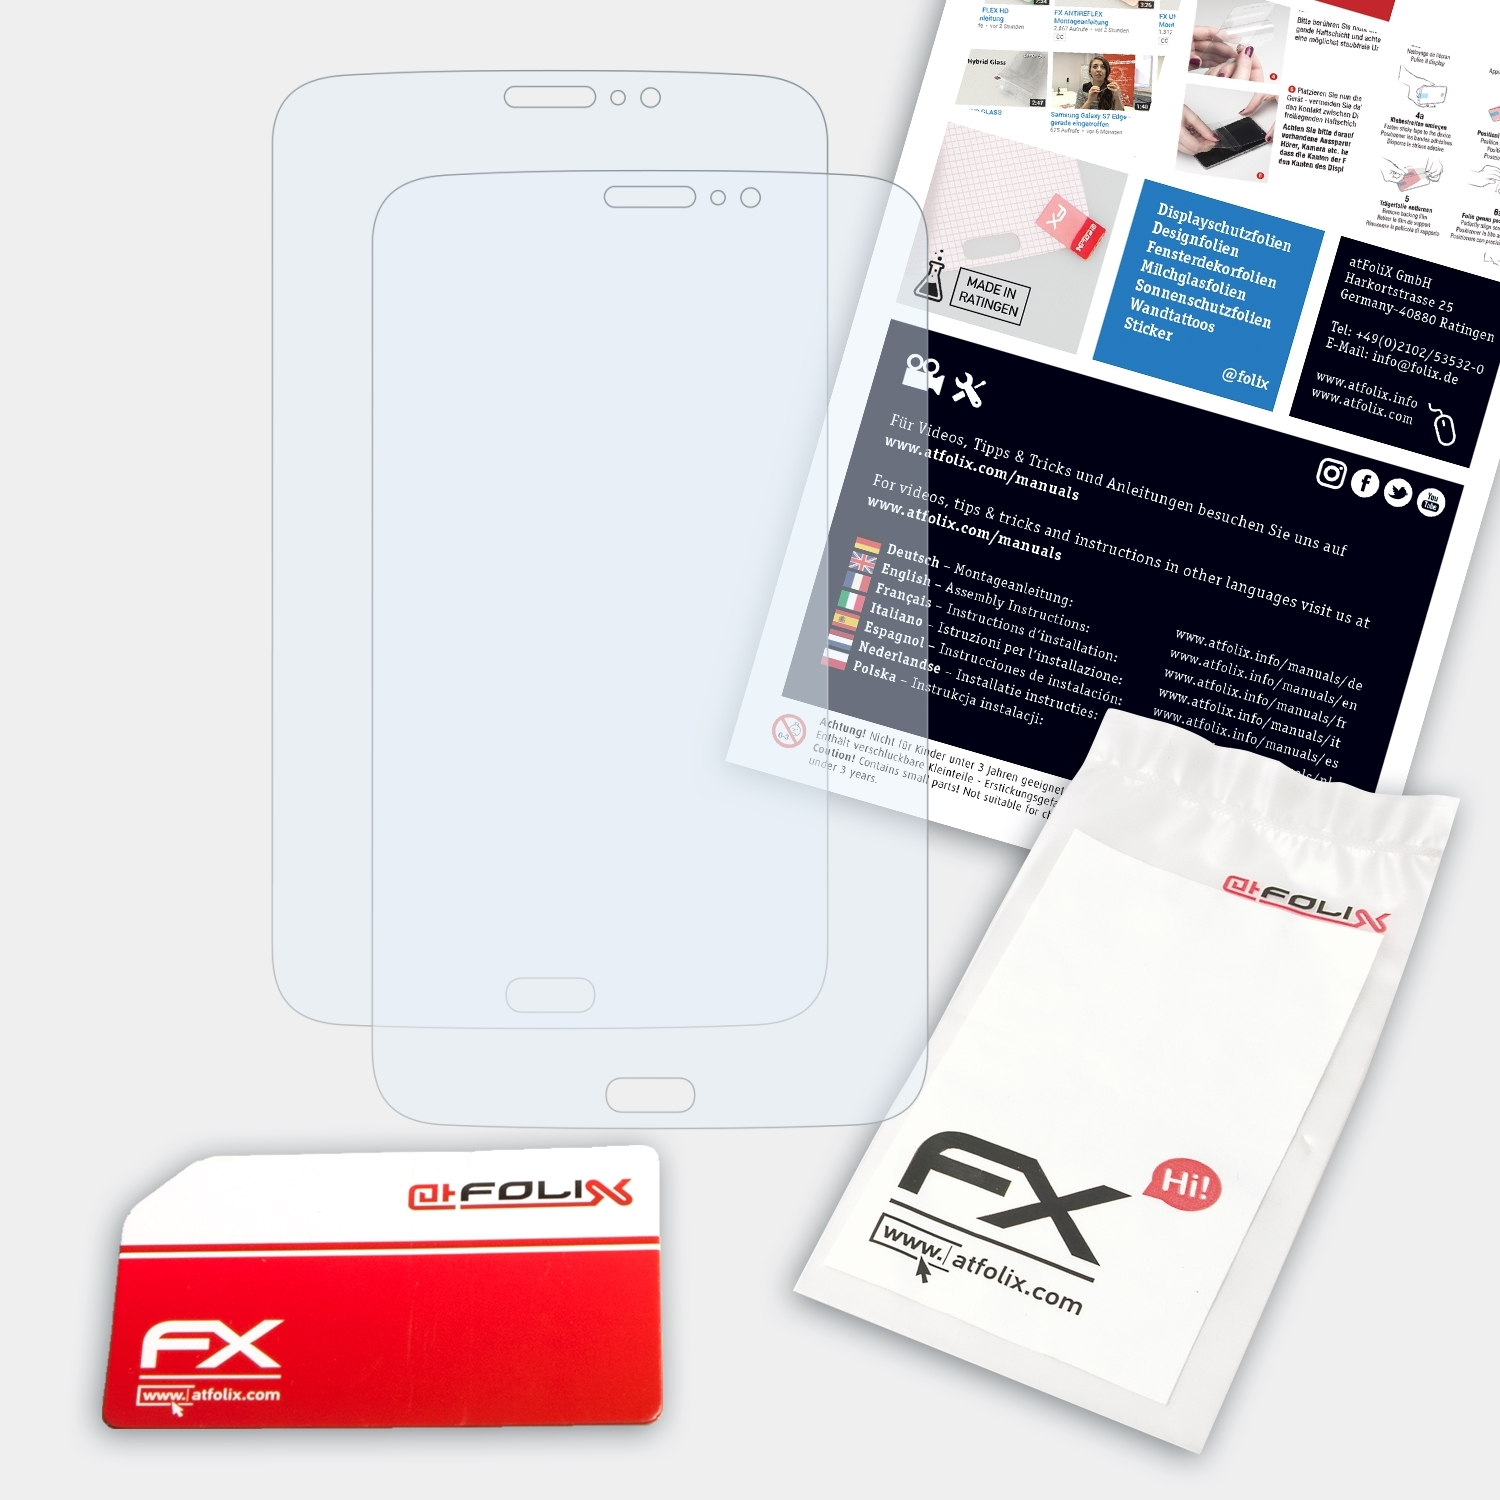 ATFOLIX 2x Displayschutz(für SM-T2110)) 3 7.0 Tab Samsung FX-Clear (3G Galaxy